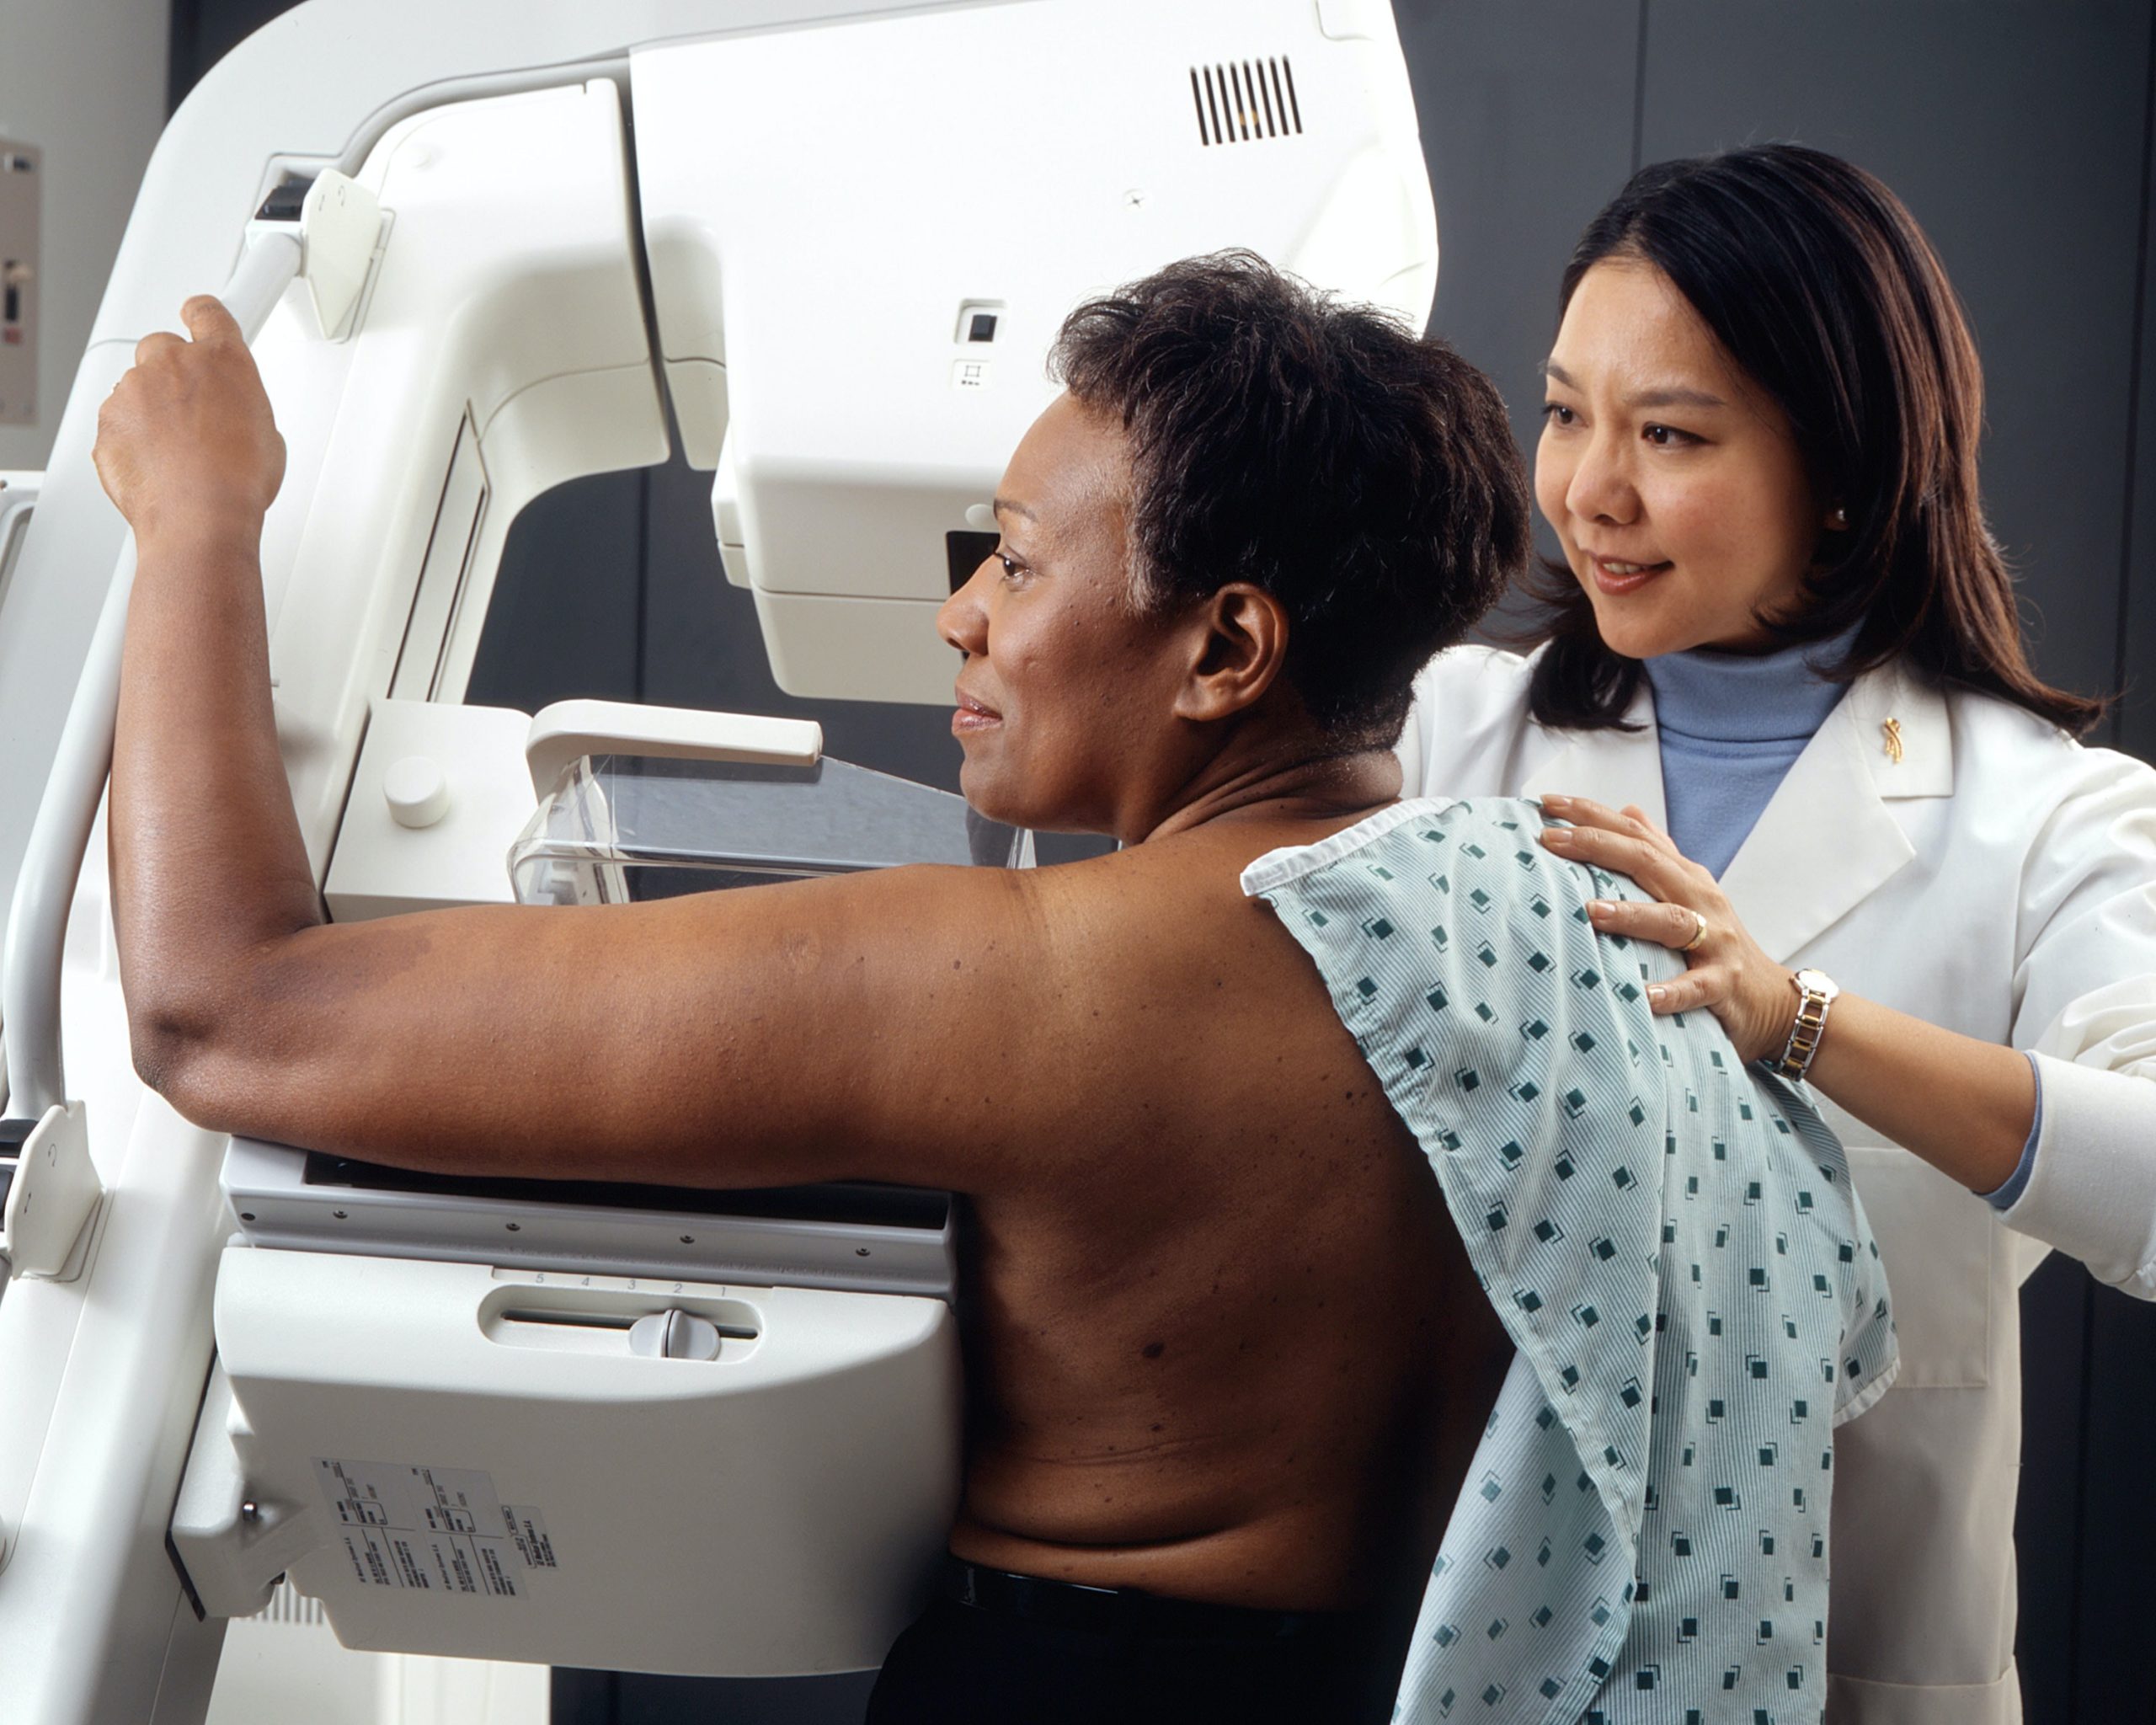 Woman having mammogram